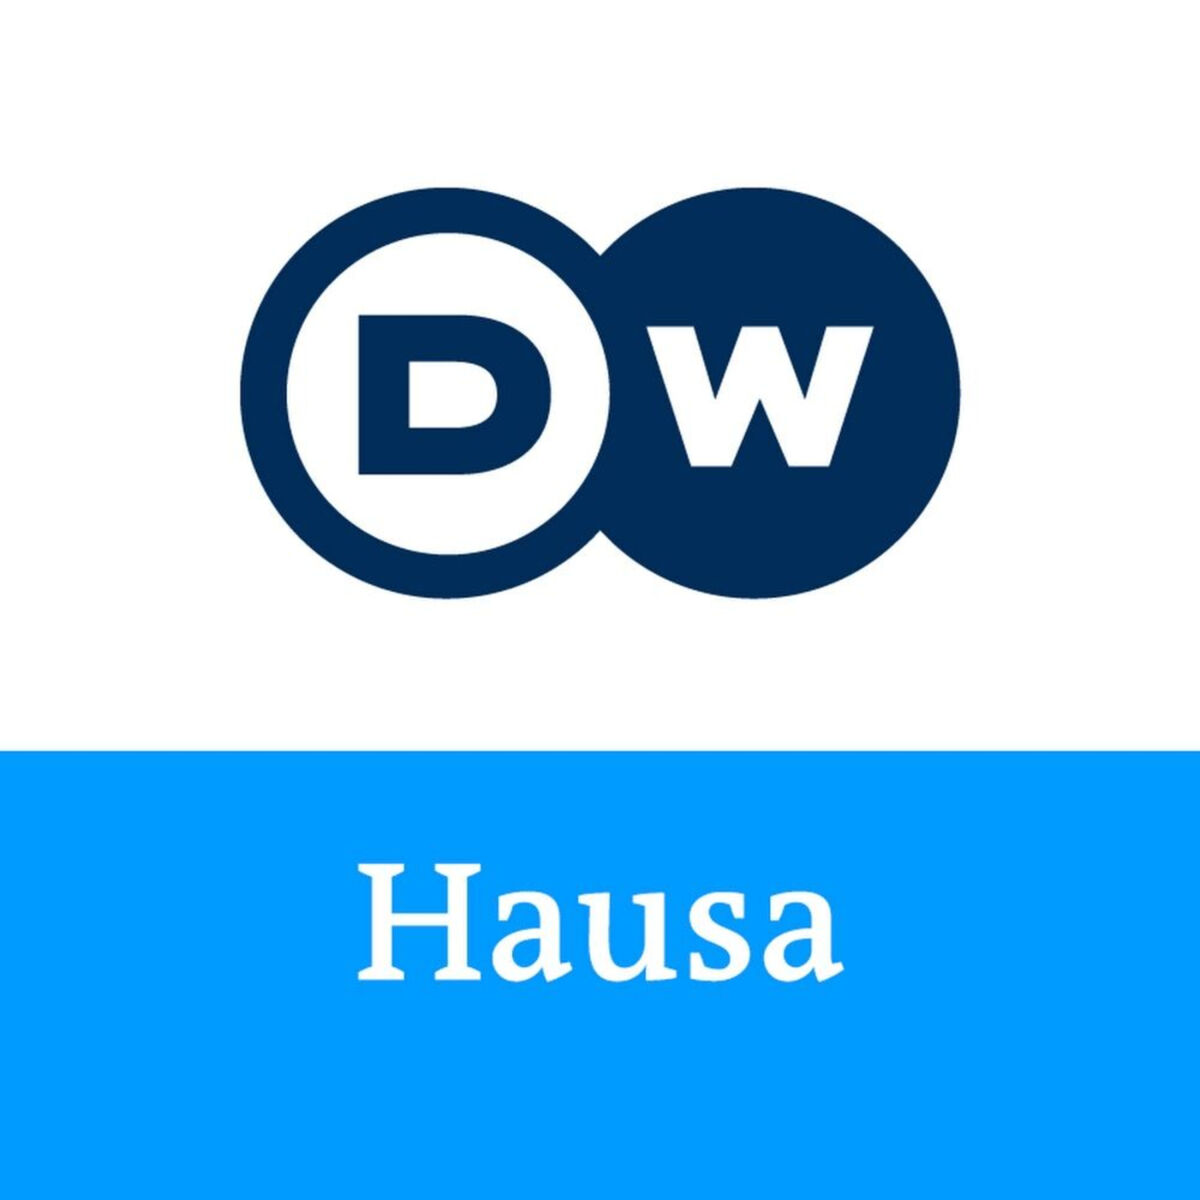 Dw tv. DW логотип. Дойче велле логотип. DW Телеканал. Deutsche Welle («немецкая волна»).